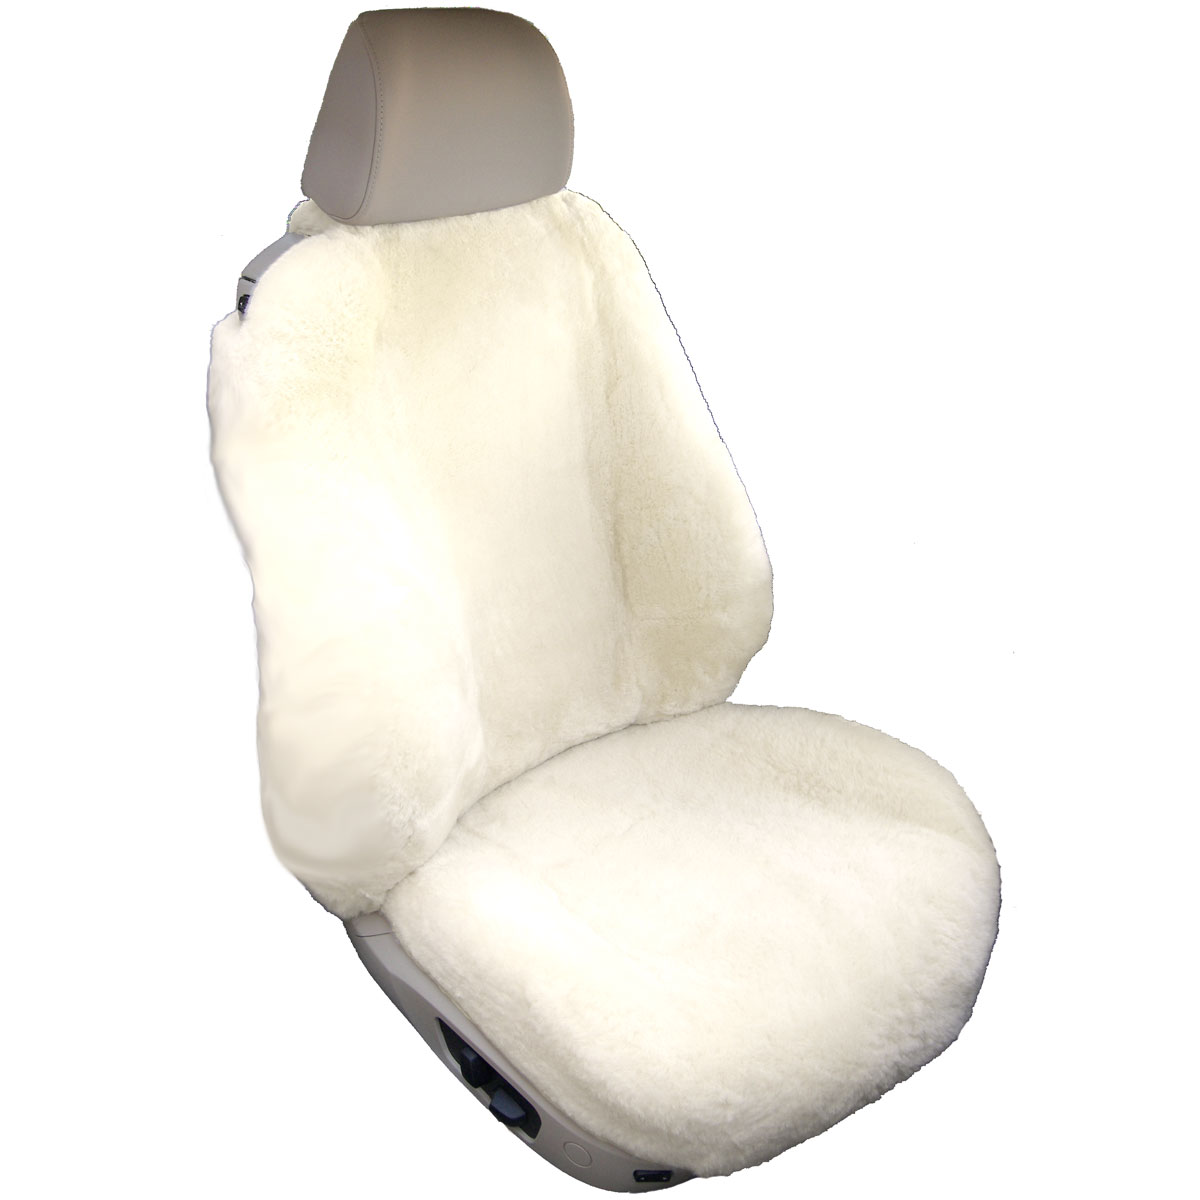 Superlamb® Original Custom Sheepskin Seat Covers